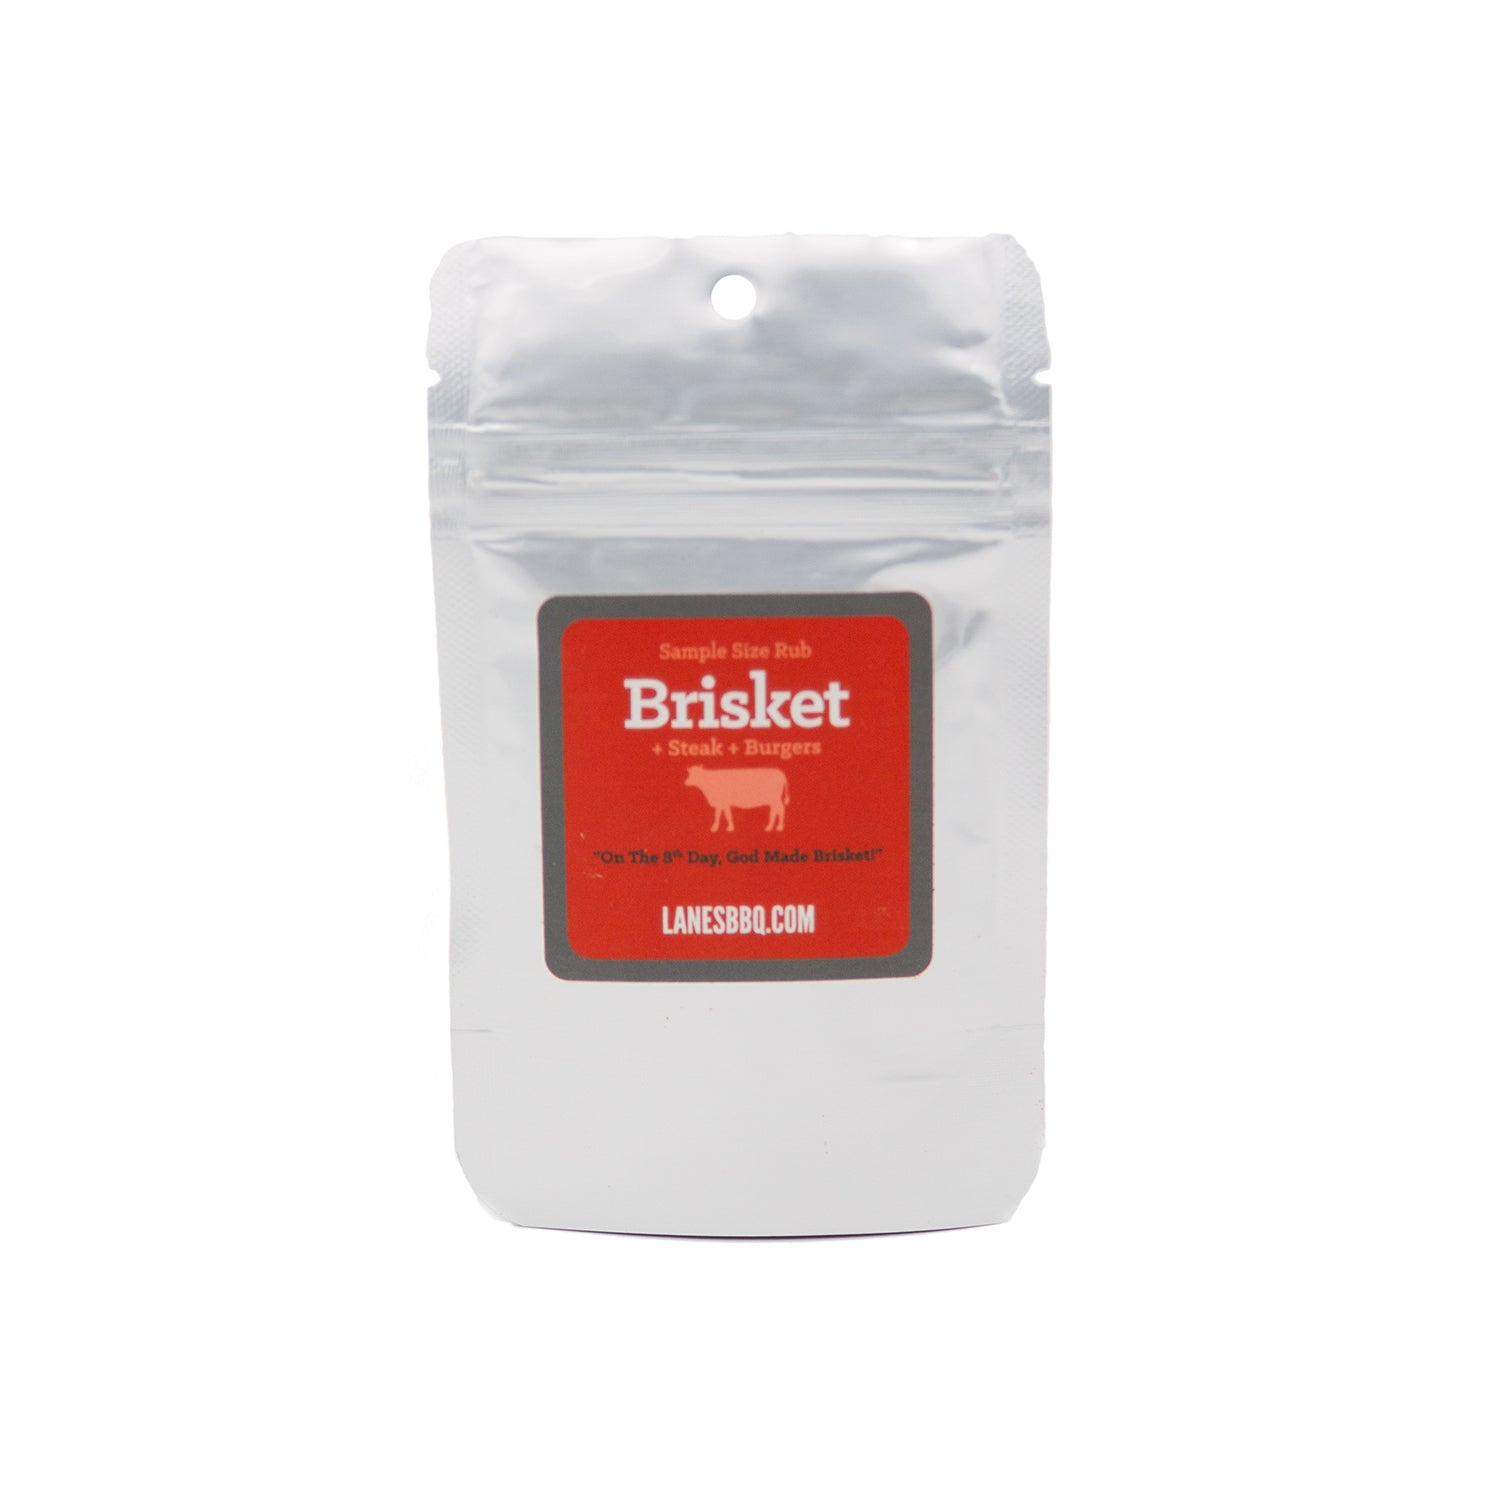 2 ounce sample bag of Brisket Rub